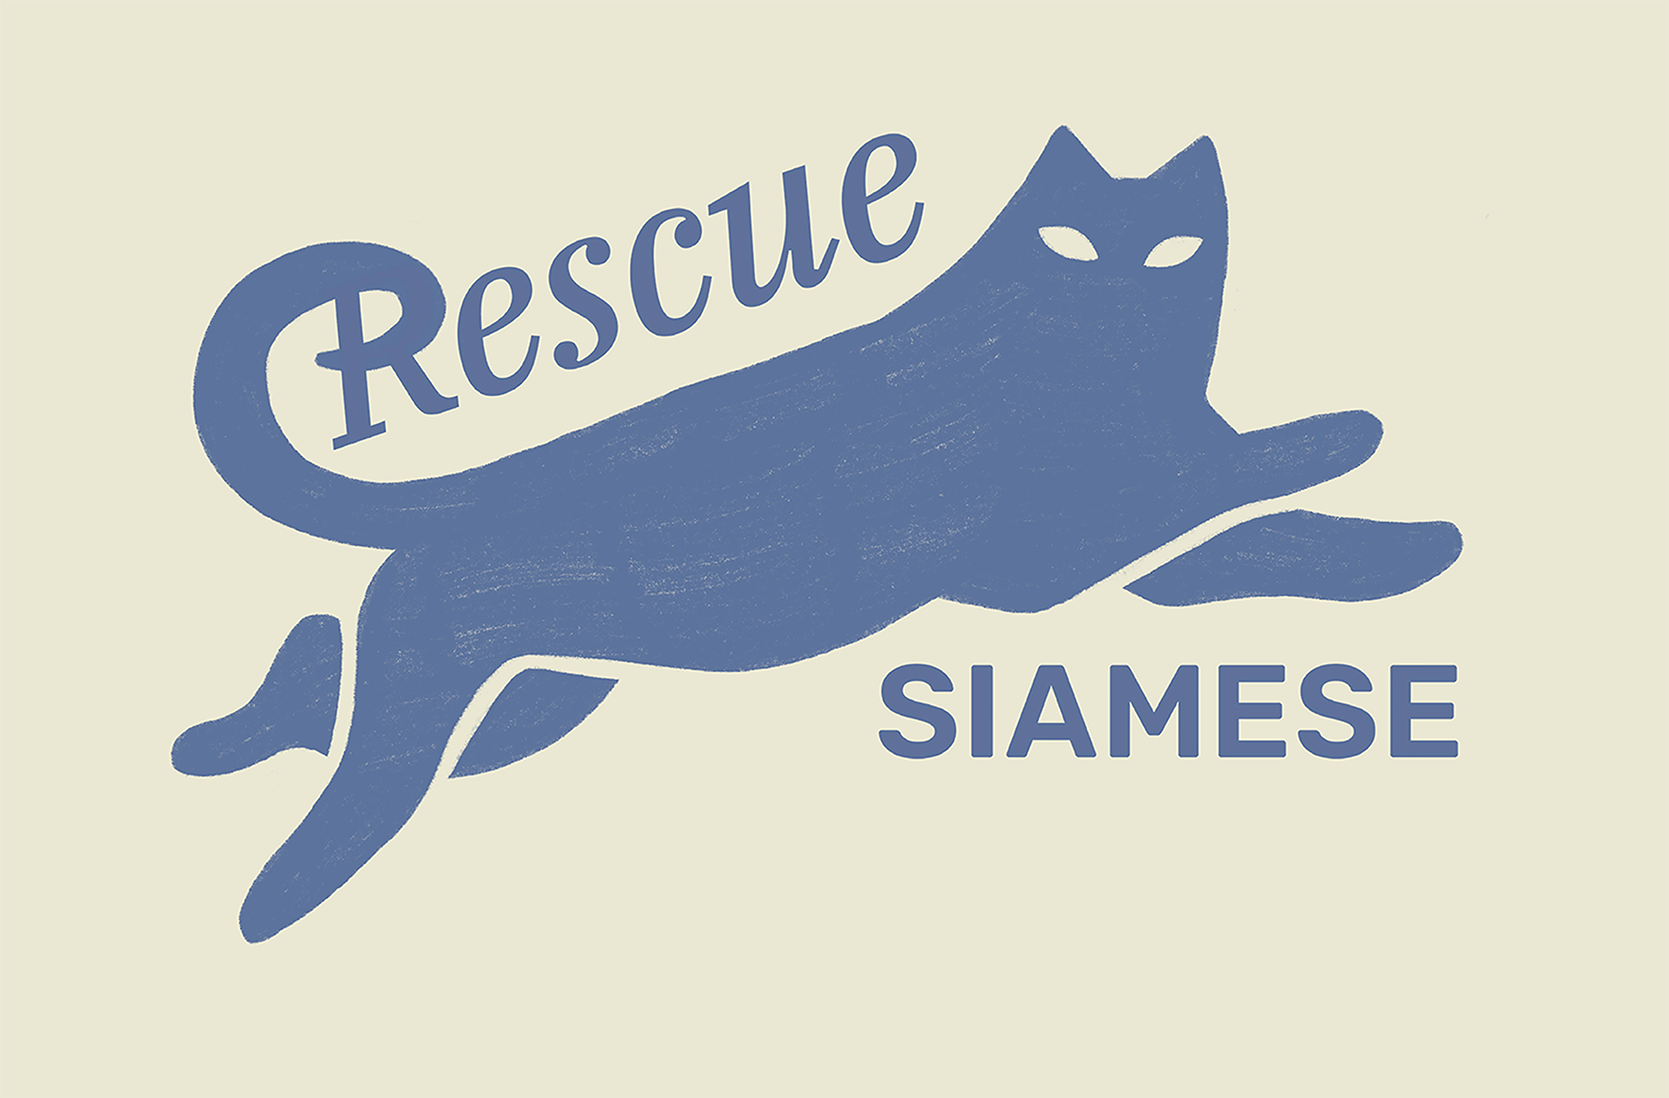 The light version of the Rescue Siamese logo